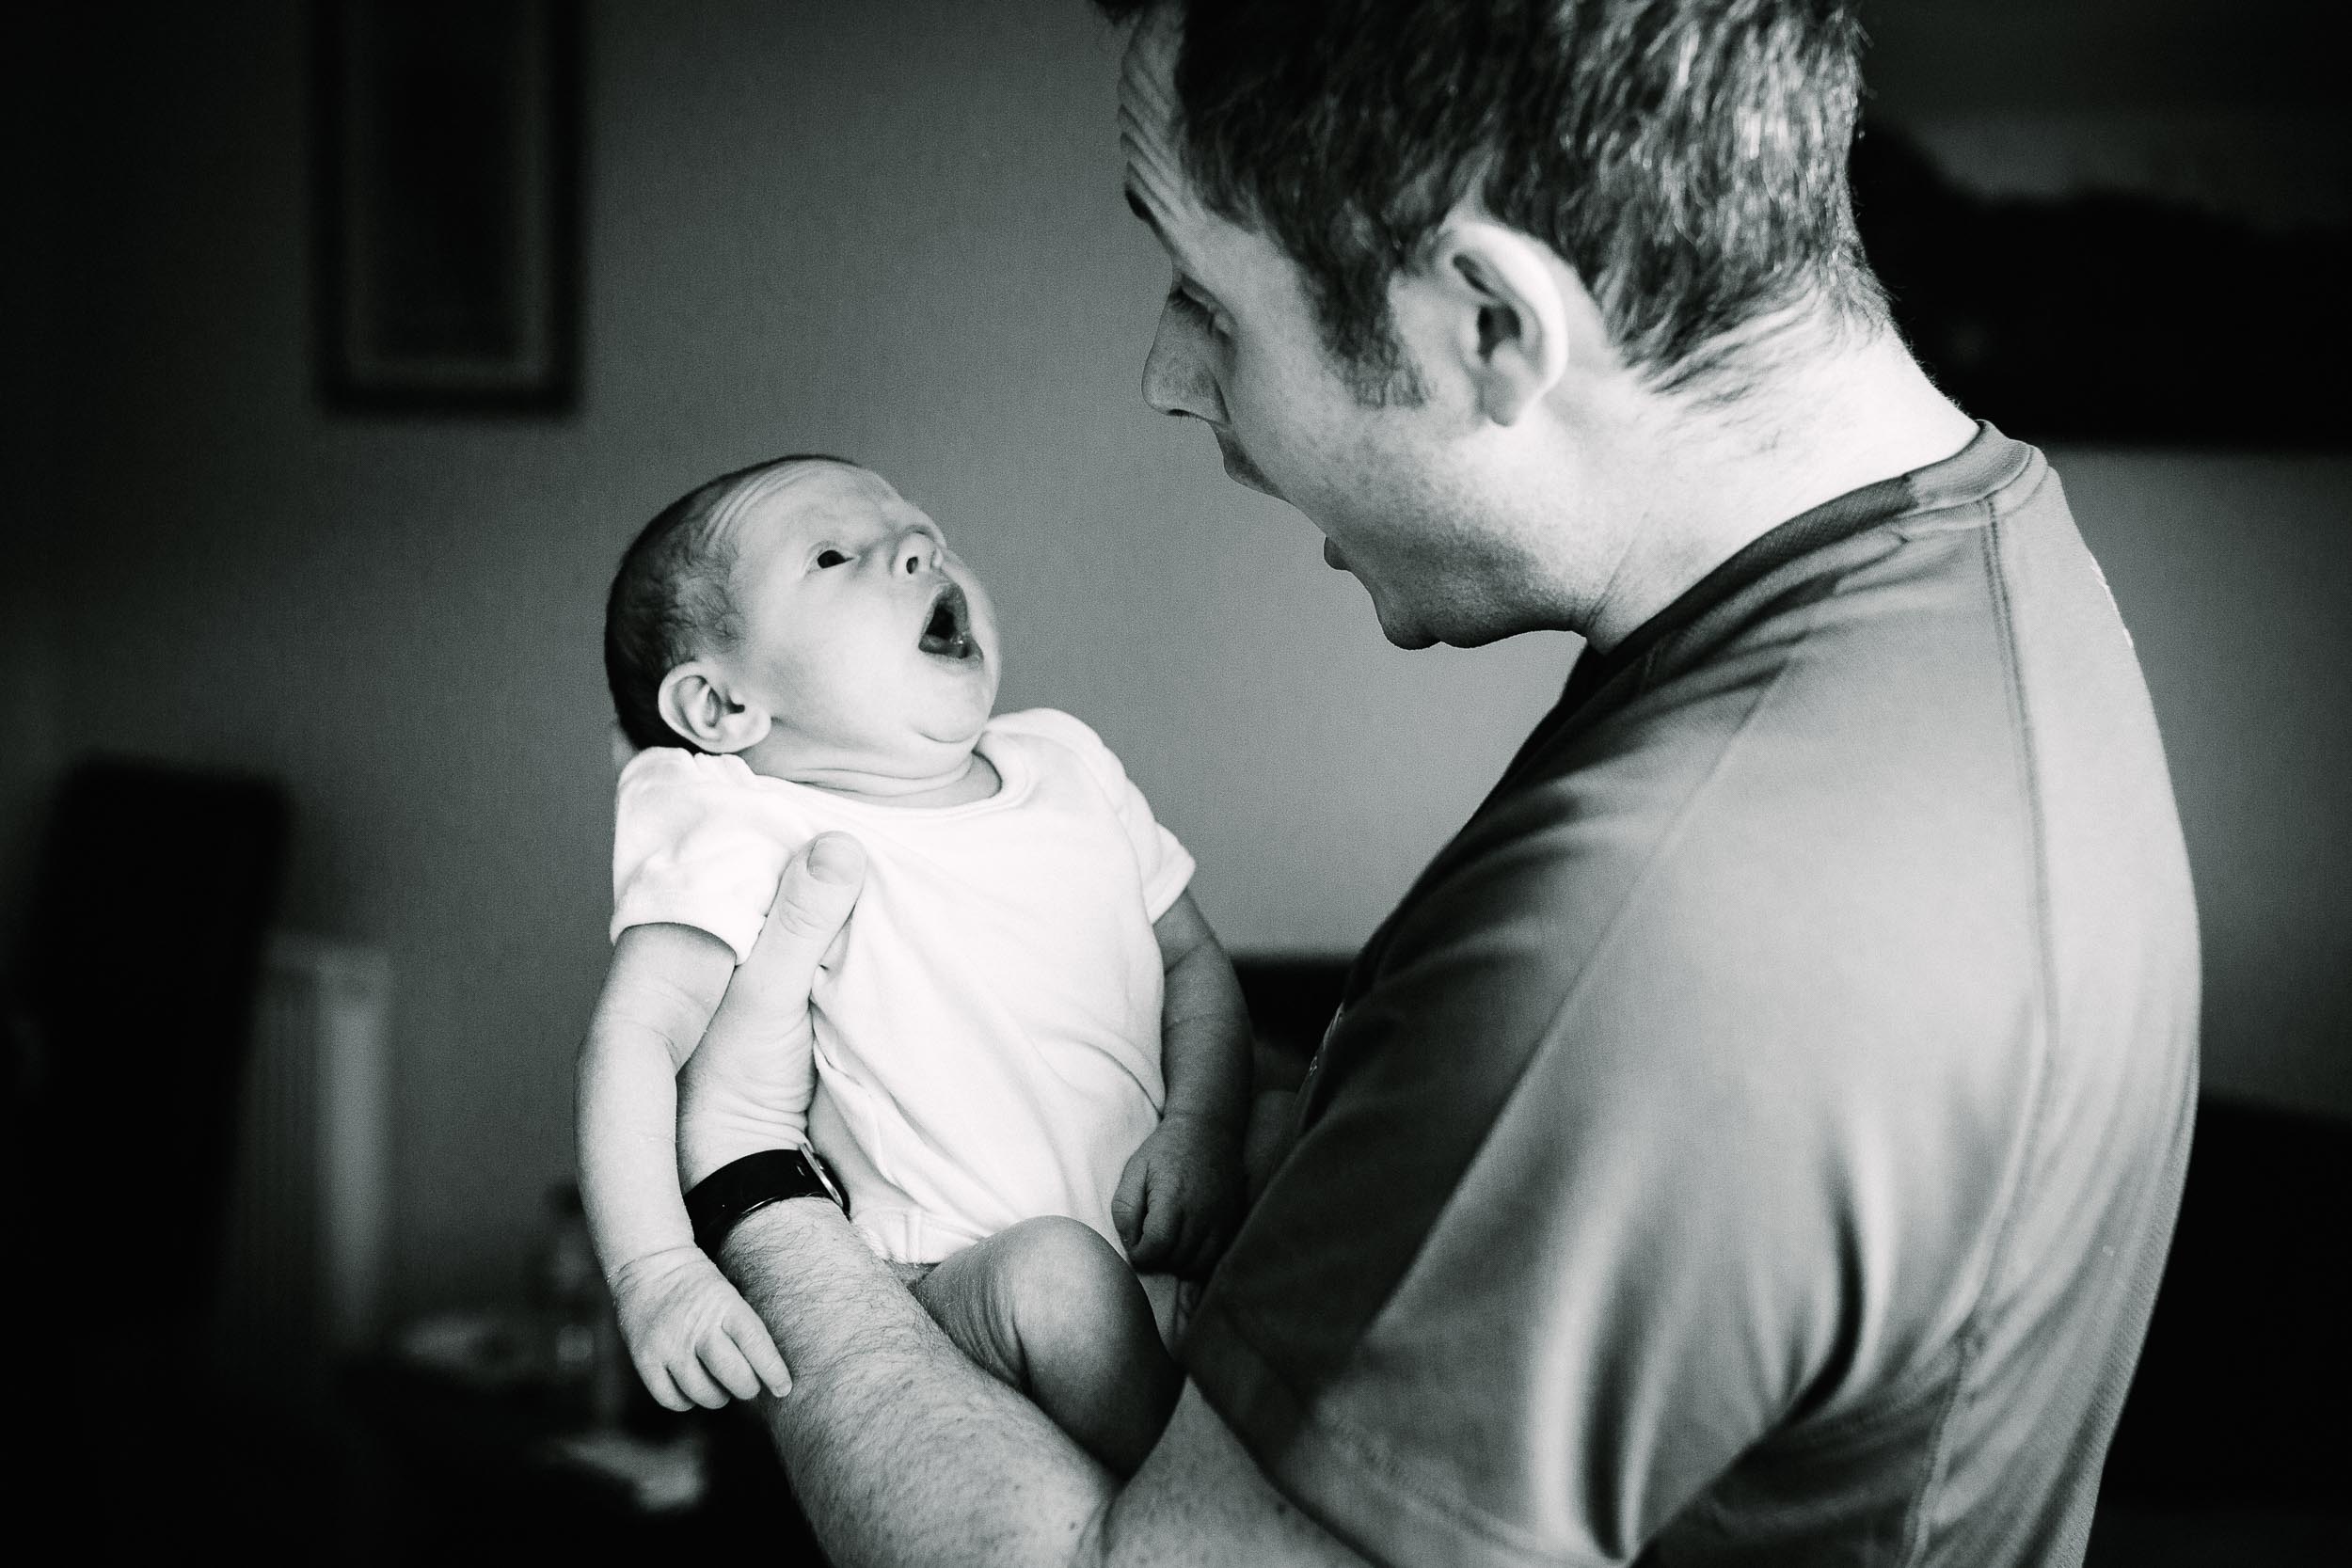 Father imitates his newborn baby yawning, photo in black and white by Emma Godfrey.